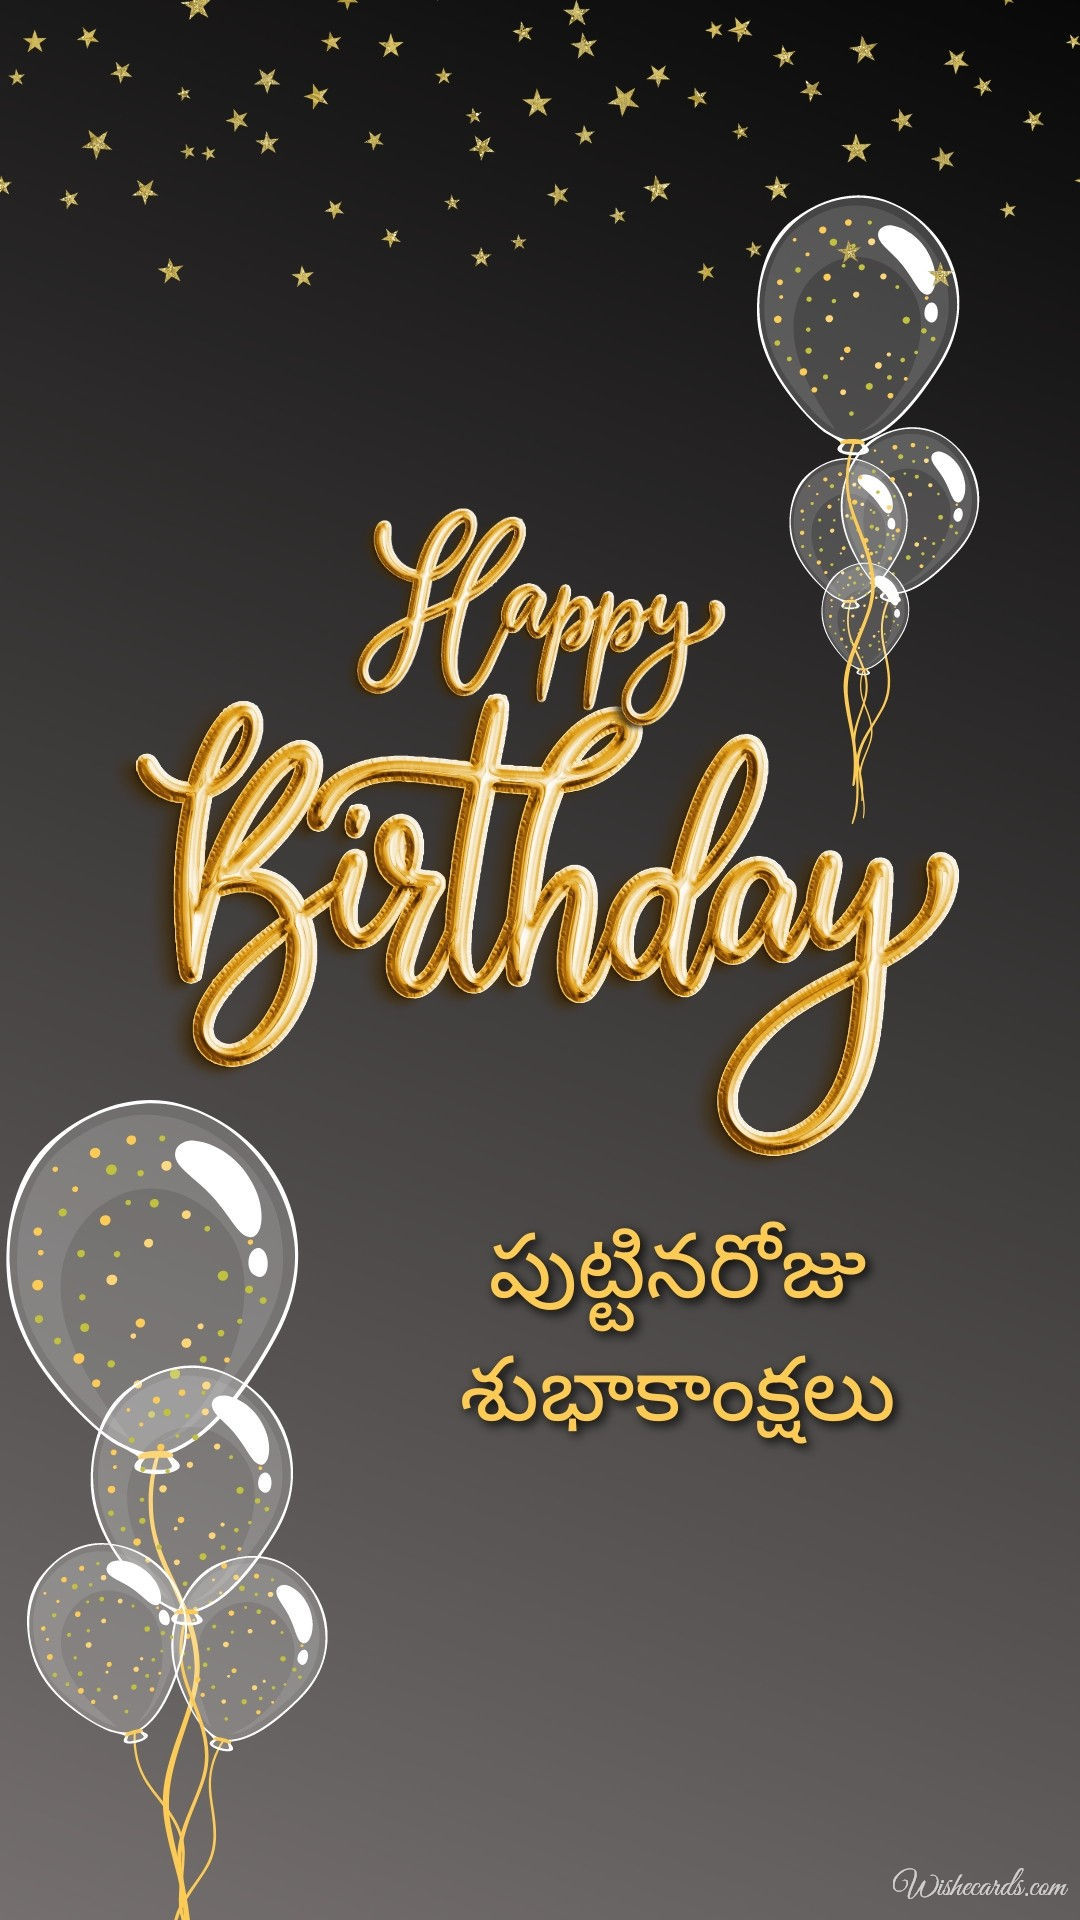 Birthday Image in Telugu